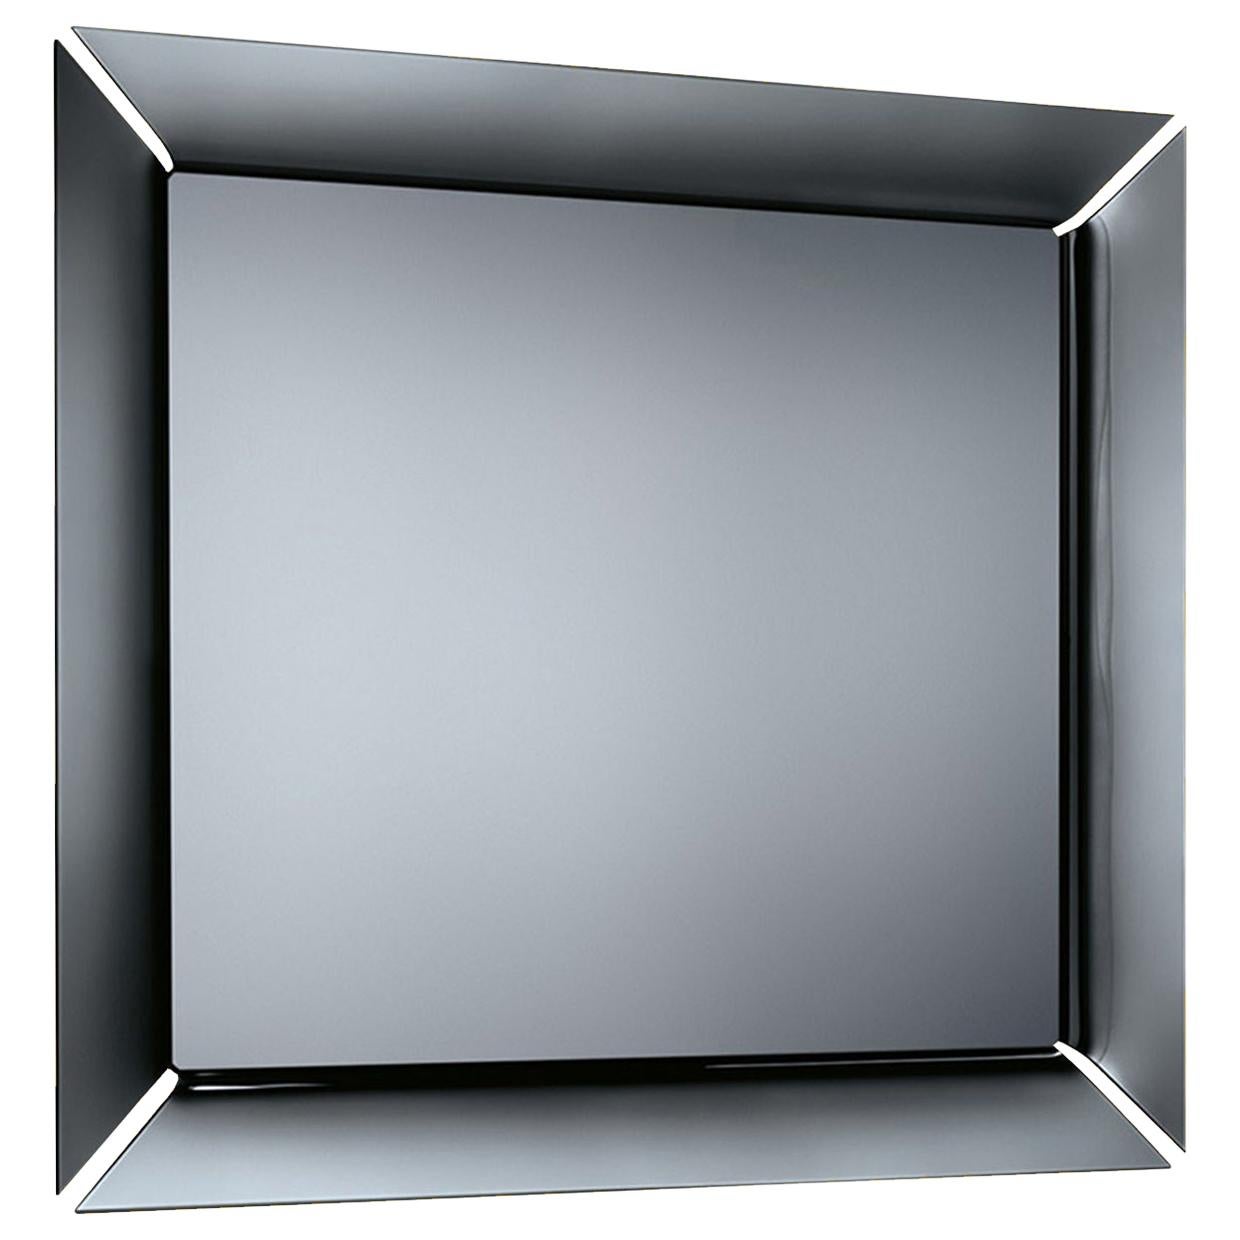 Fiam Italia Customizable All Glass Caadre Standing Mirror by Philippe Starck